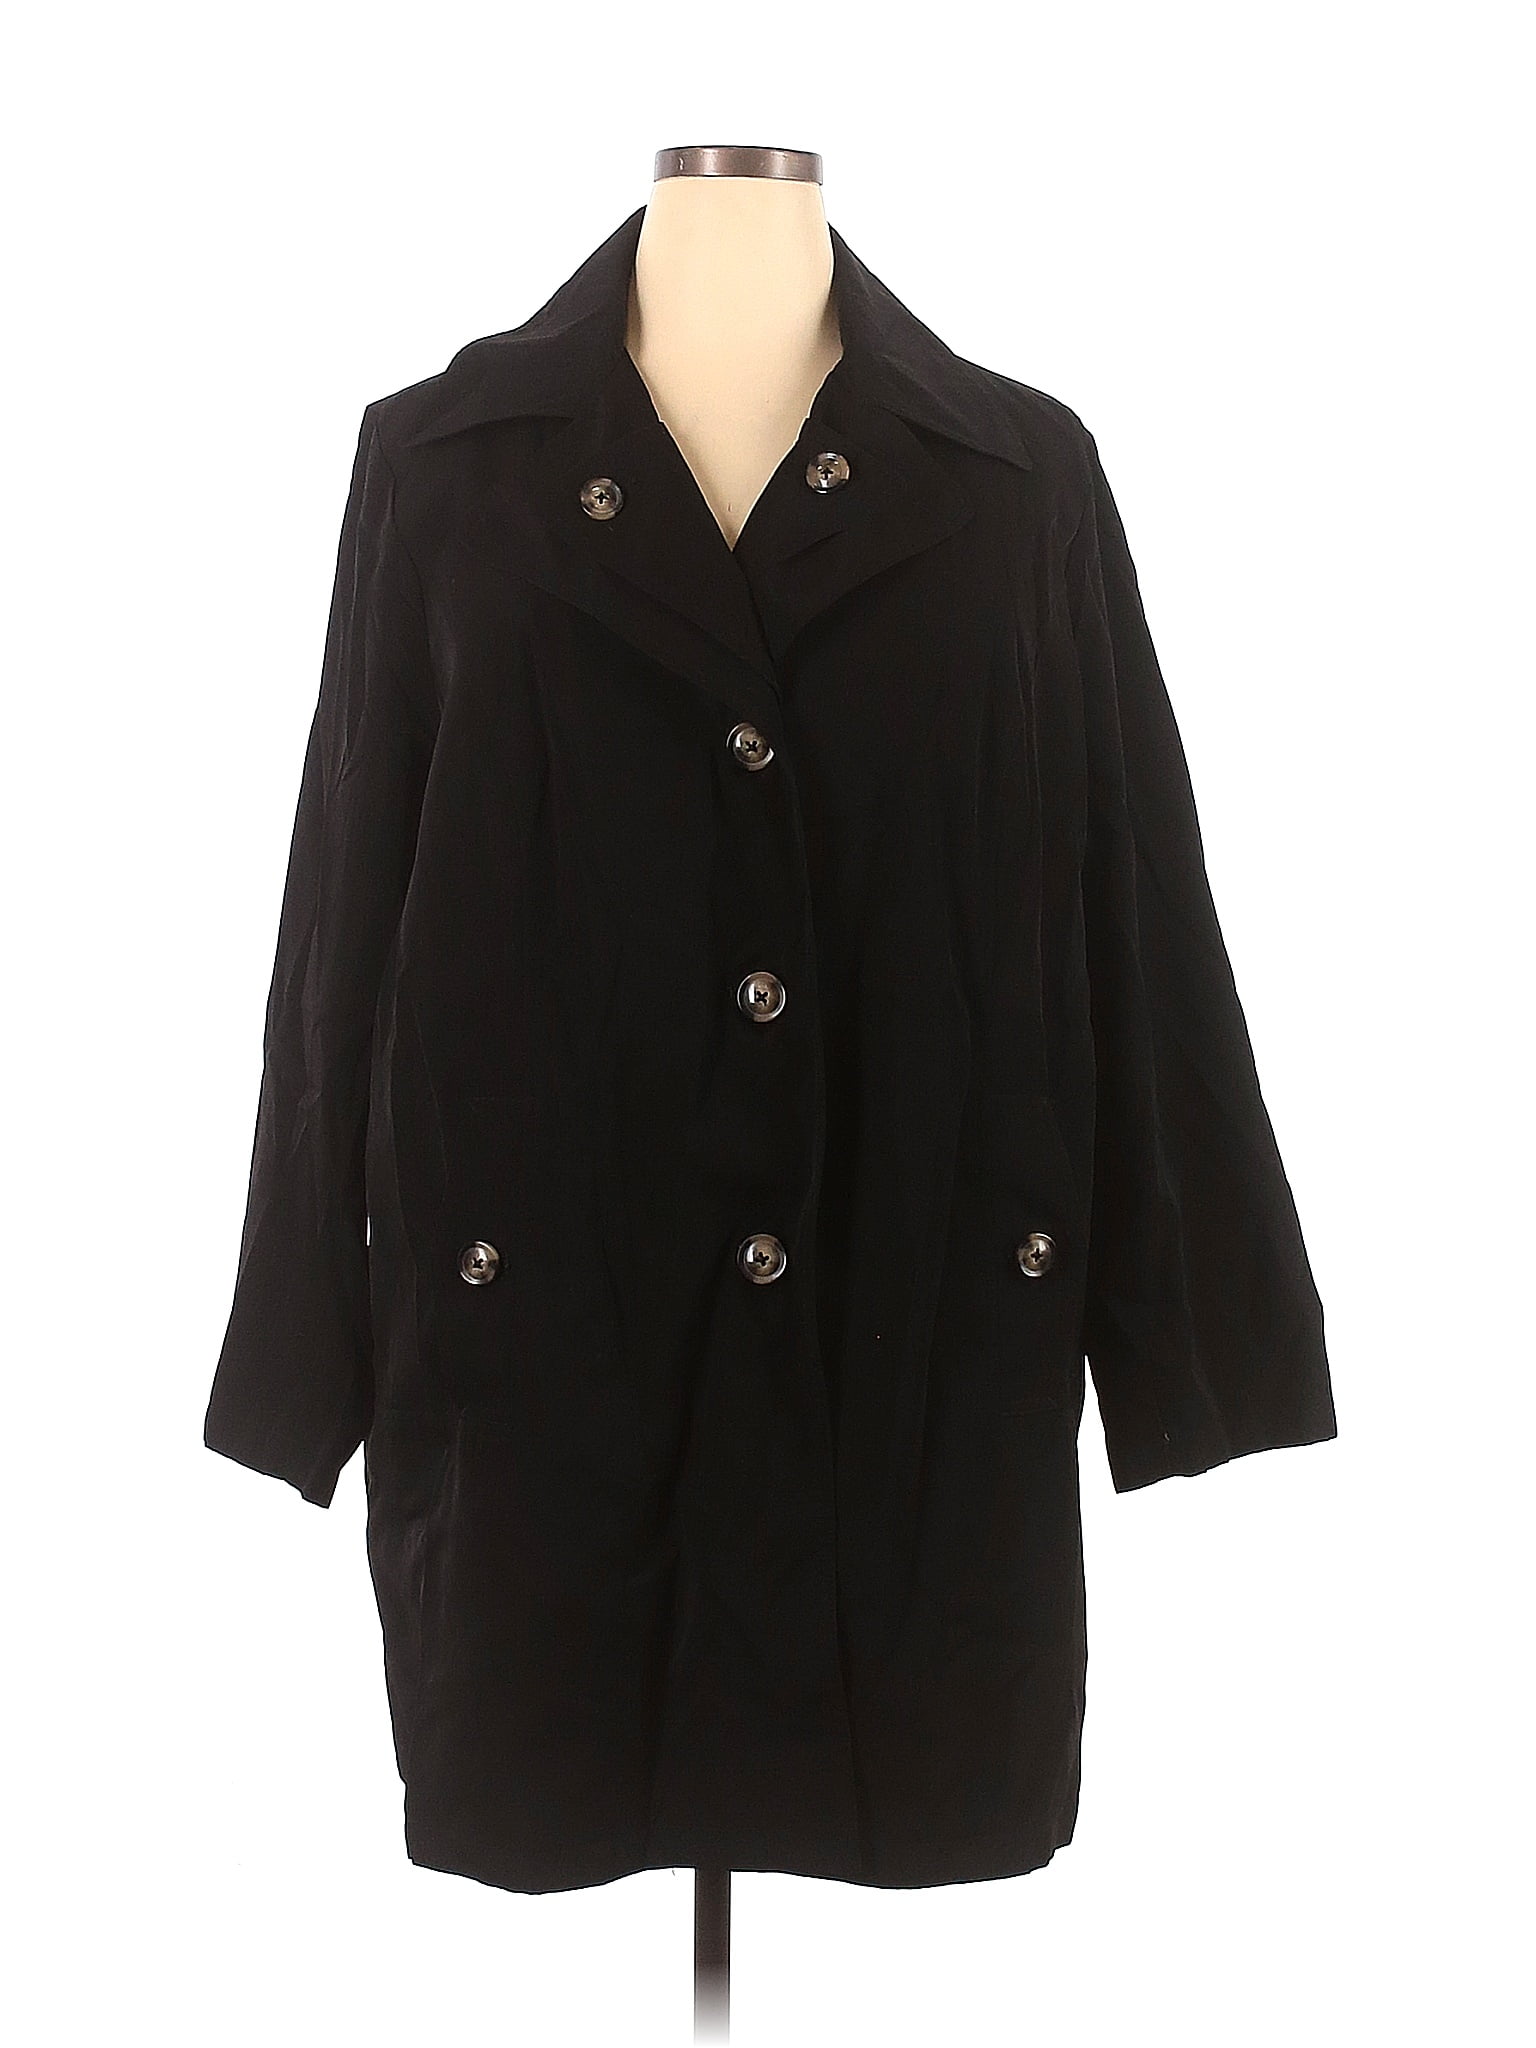 London Fog 100% Polyester Black Coat Size 2X (Plus) - 67% off | thredUP